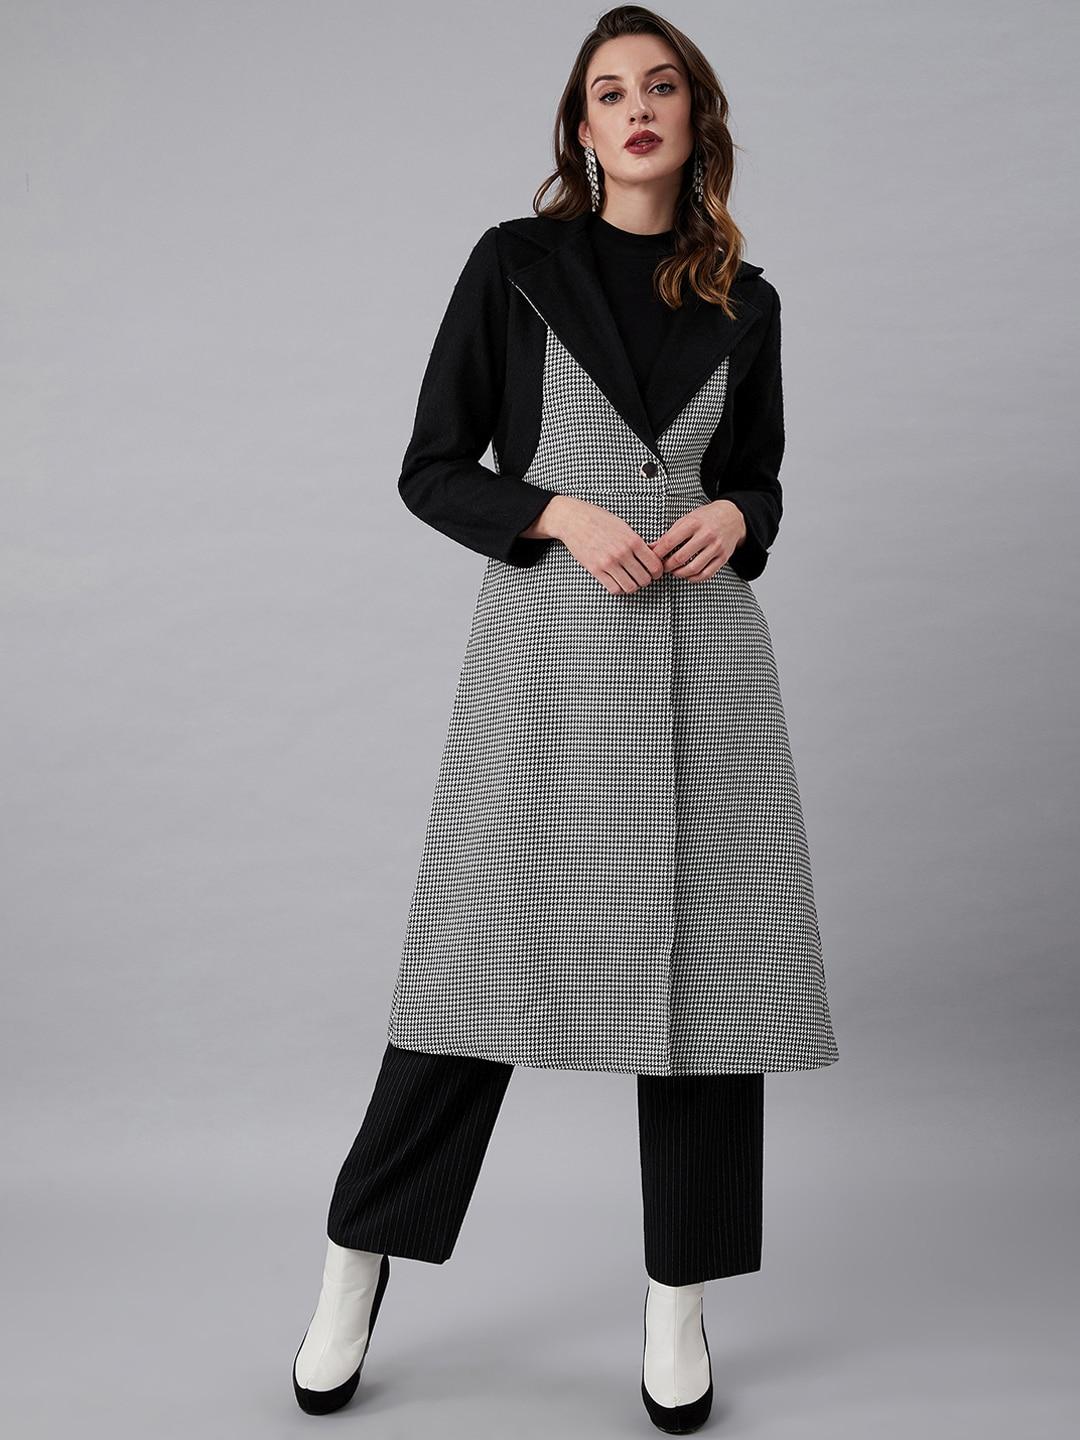 athena women black & white houndstooth patterned longline wool overcoat